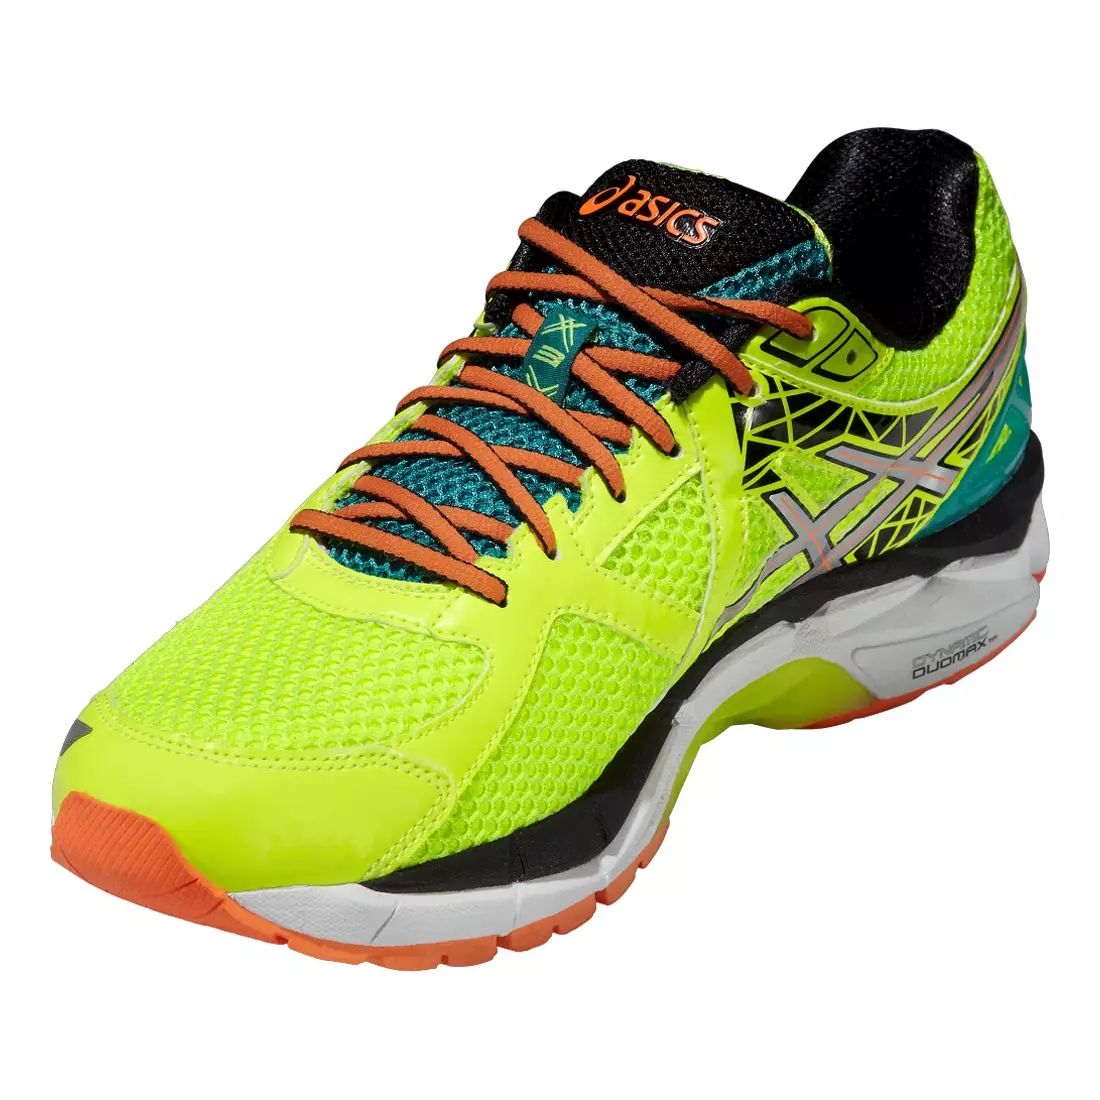 ASICS GT-2000 3 running shoes 0793